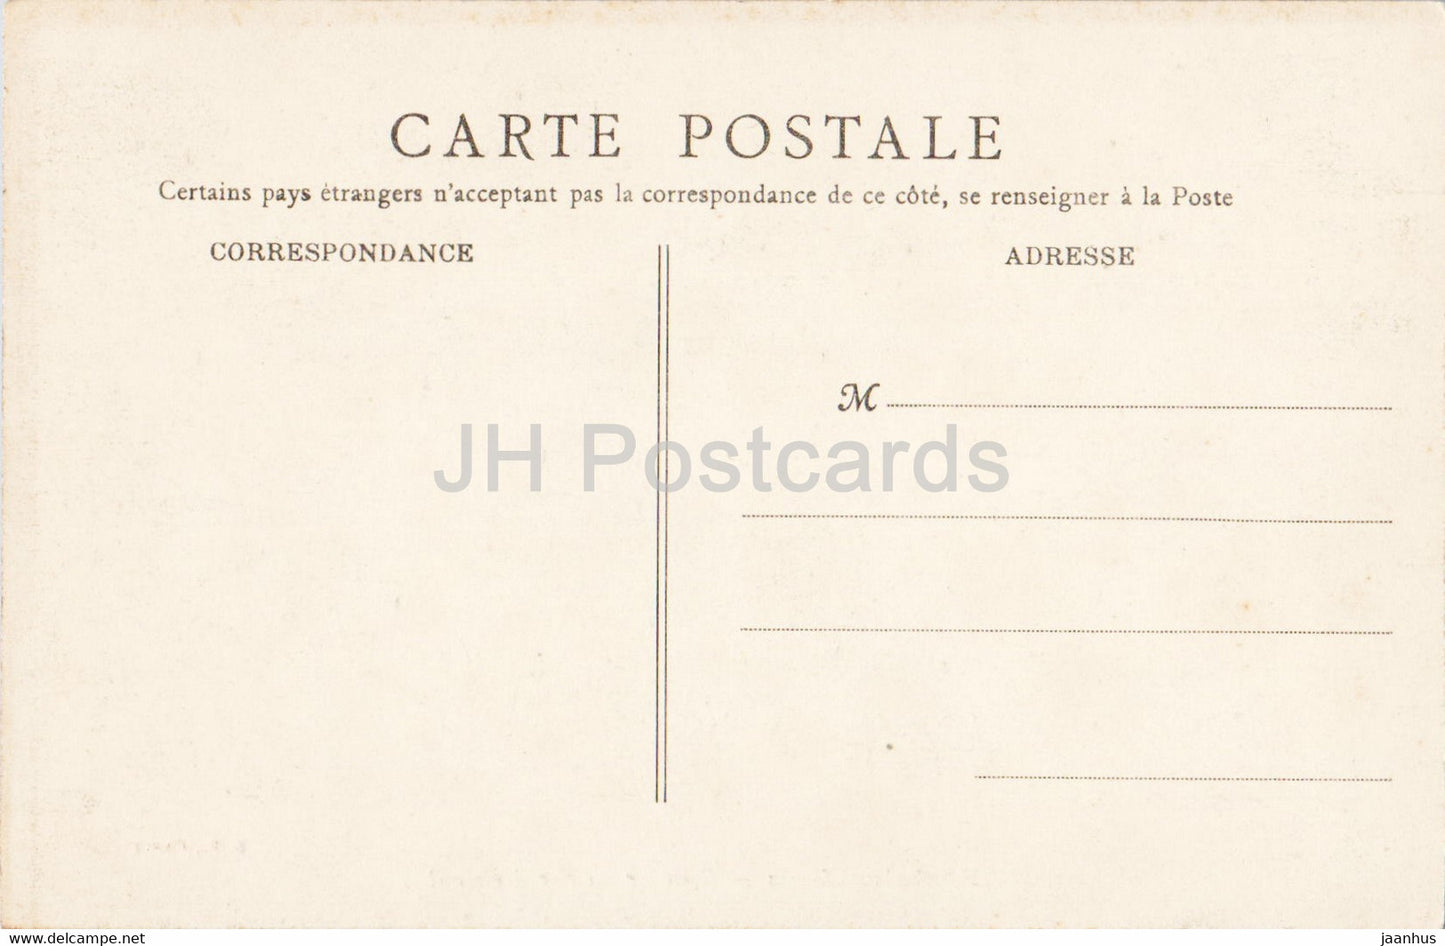 Fontainebleau - Escalier du Fer a cheval - alte Postkarte - 1908 - Frankreich - unbenutzt